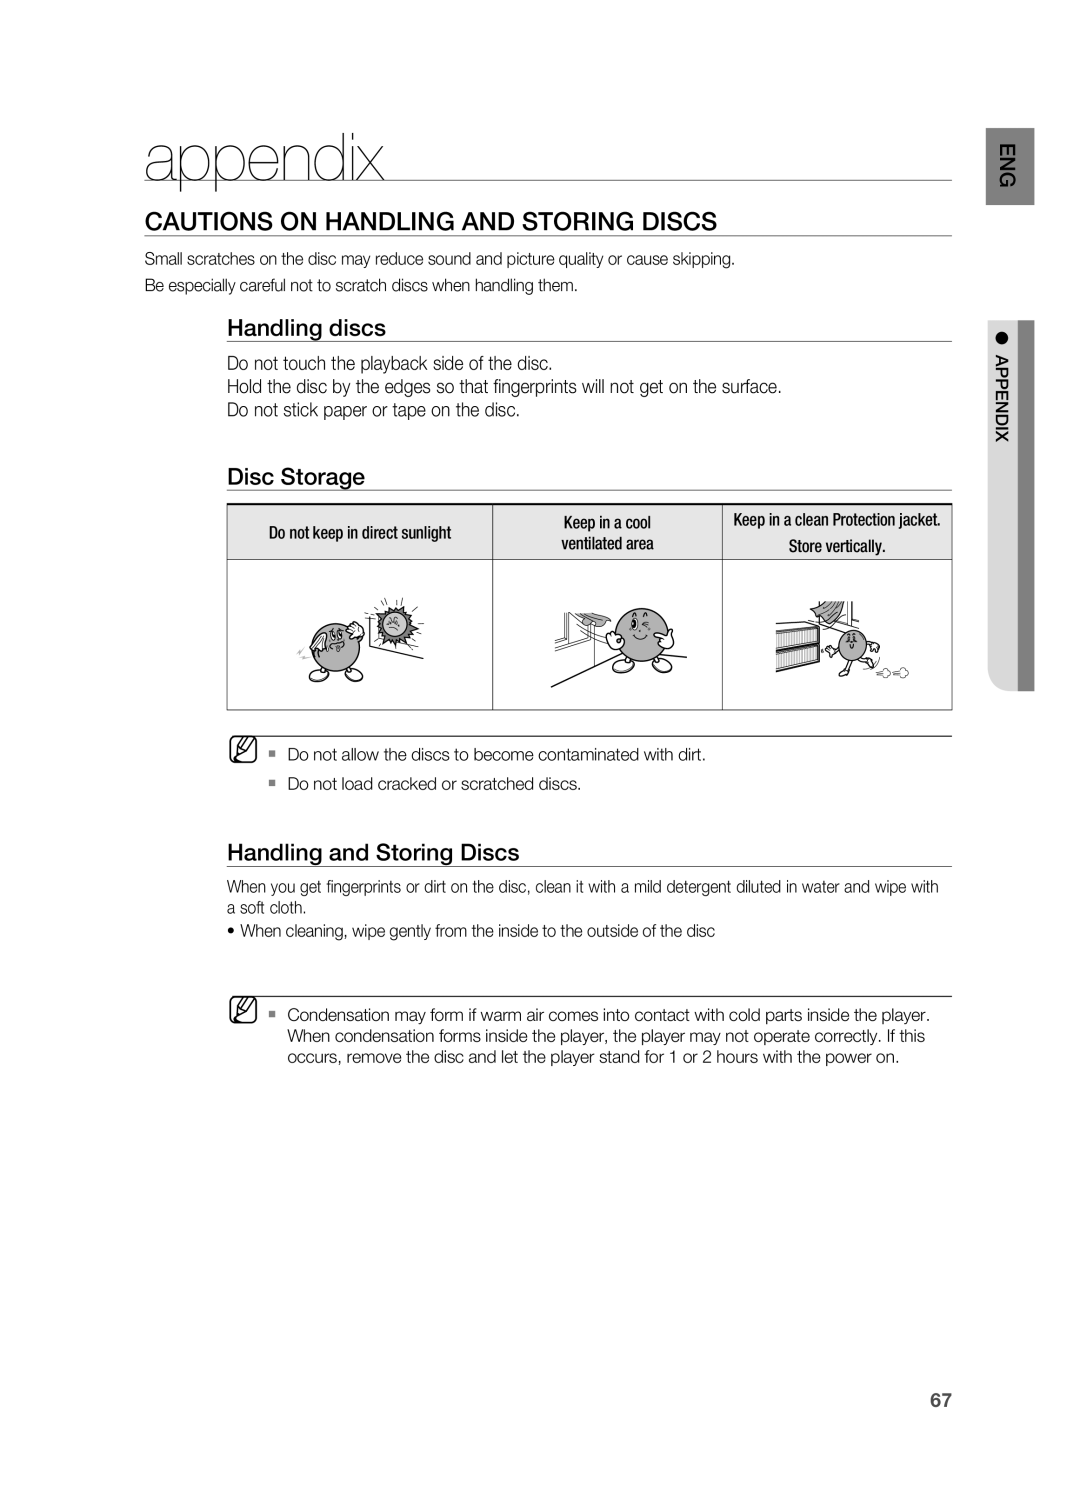 Samsung AH68-02019S manual appendix, Cautions on Handling and Storing Discs, Handling discs, Disc Storage 